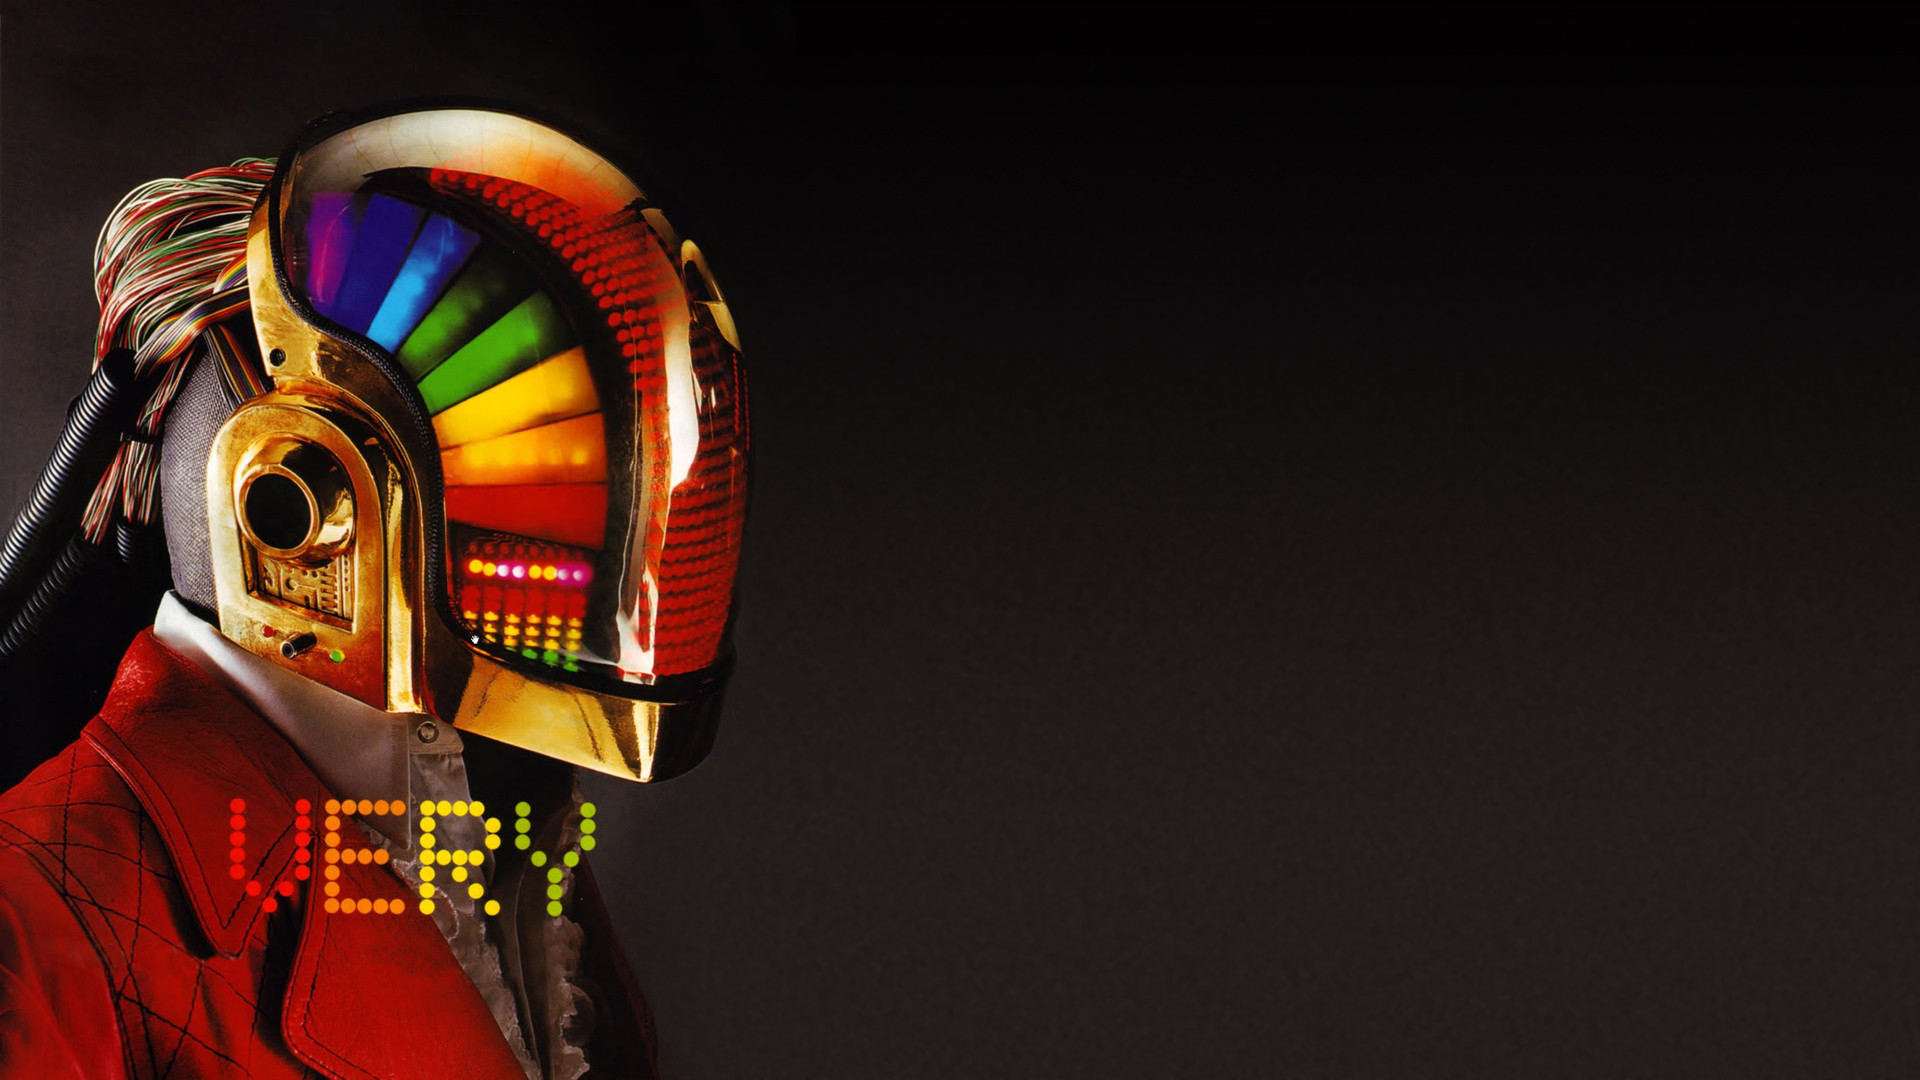 Descarga gratuita de fondo de pantalla para móvil de Música, Daft Punk.